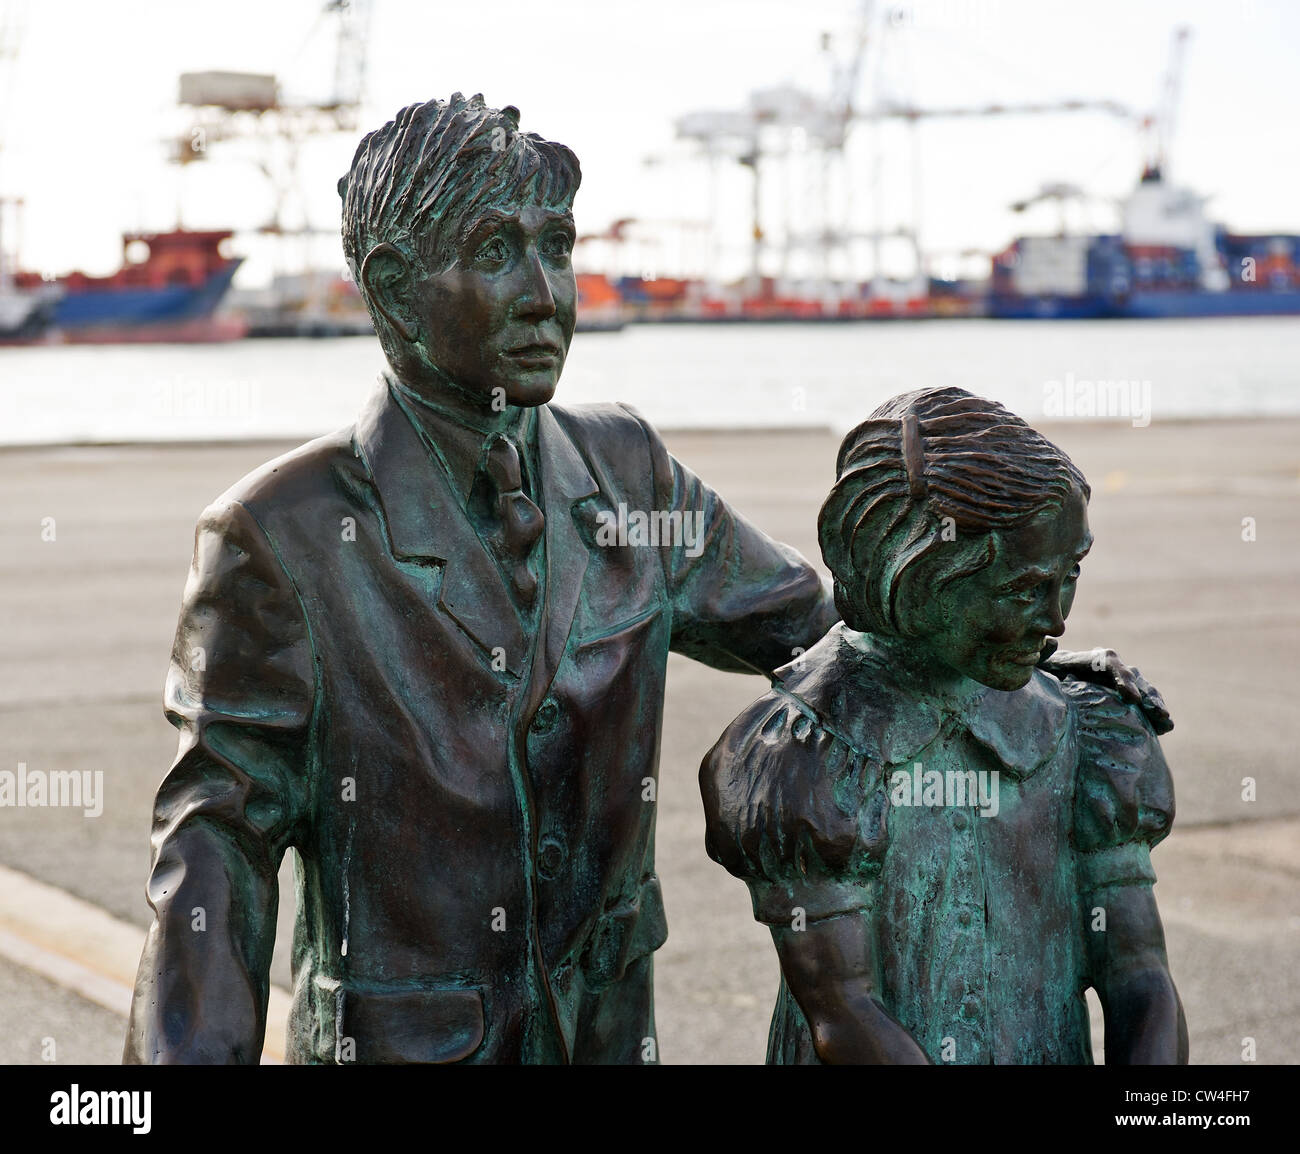 Victoria Quay Fremantle - Kind Migranten Statue auf Victoria Quay in Fremantle, Western Australia Stockfoto